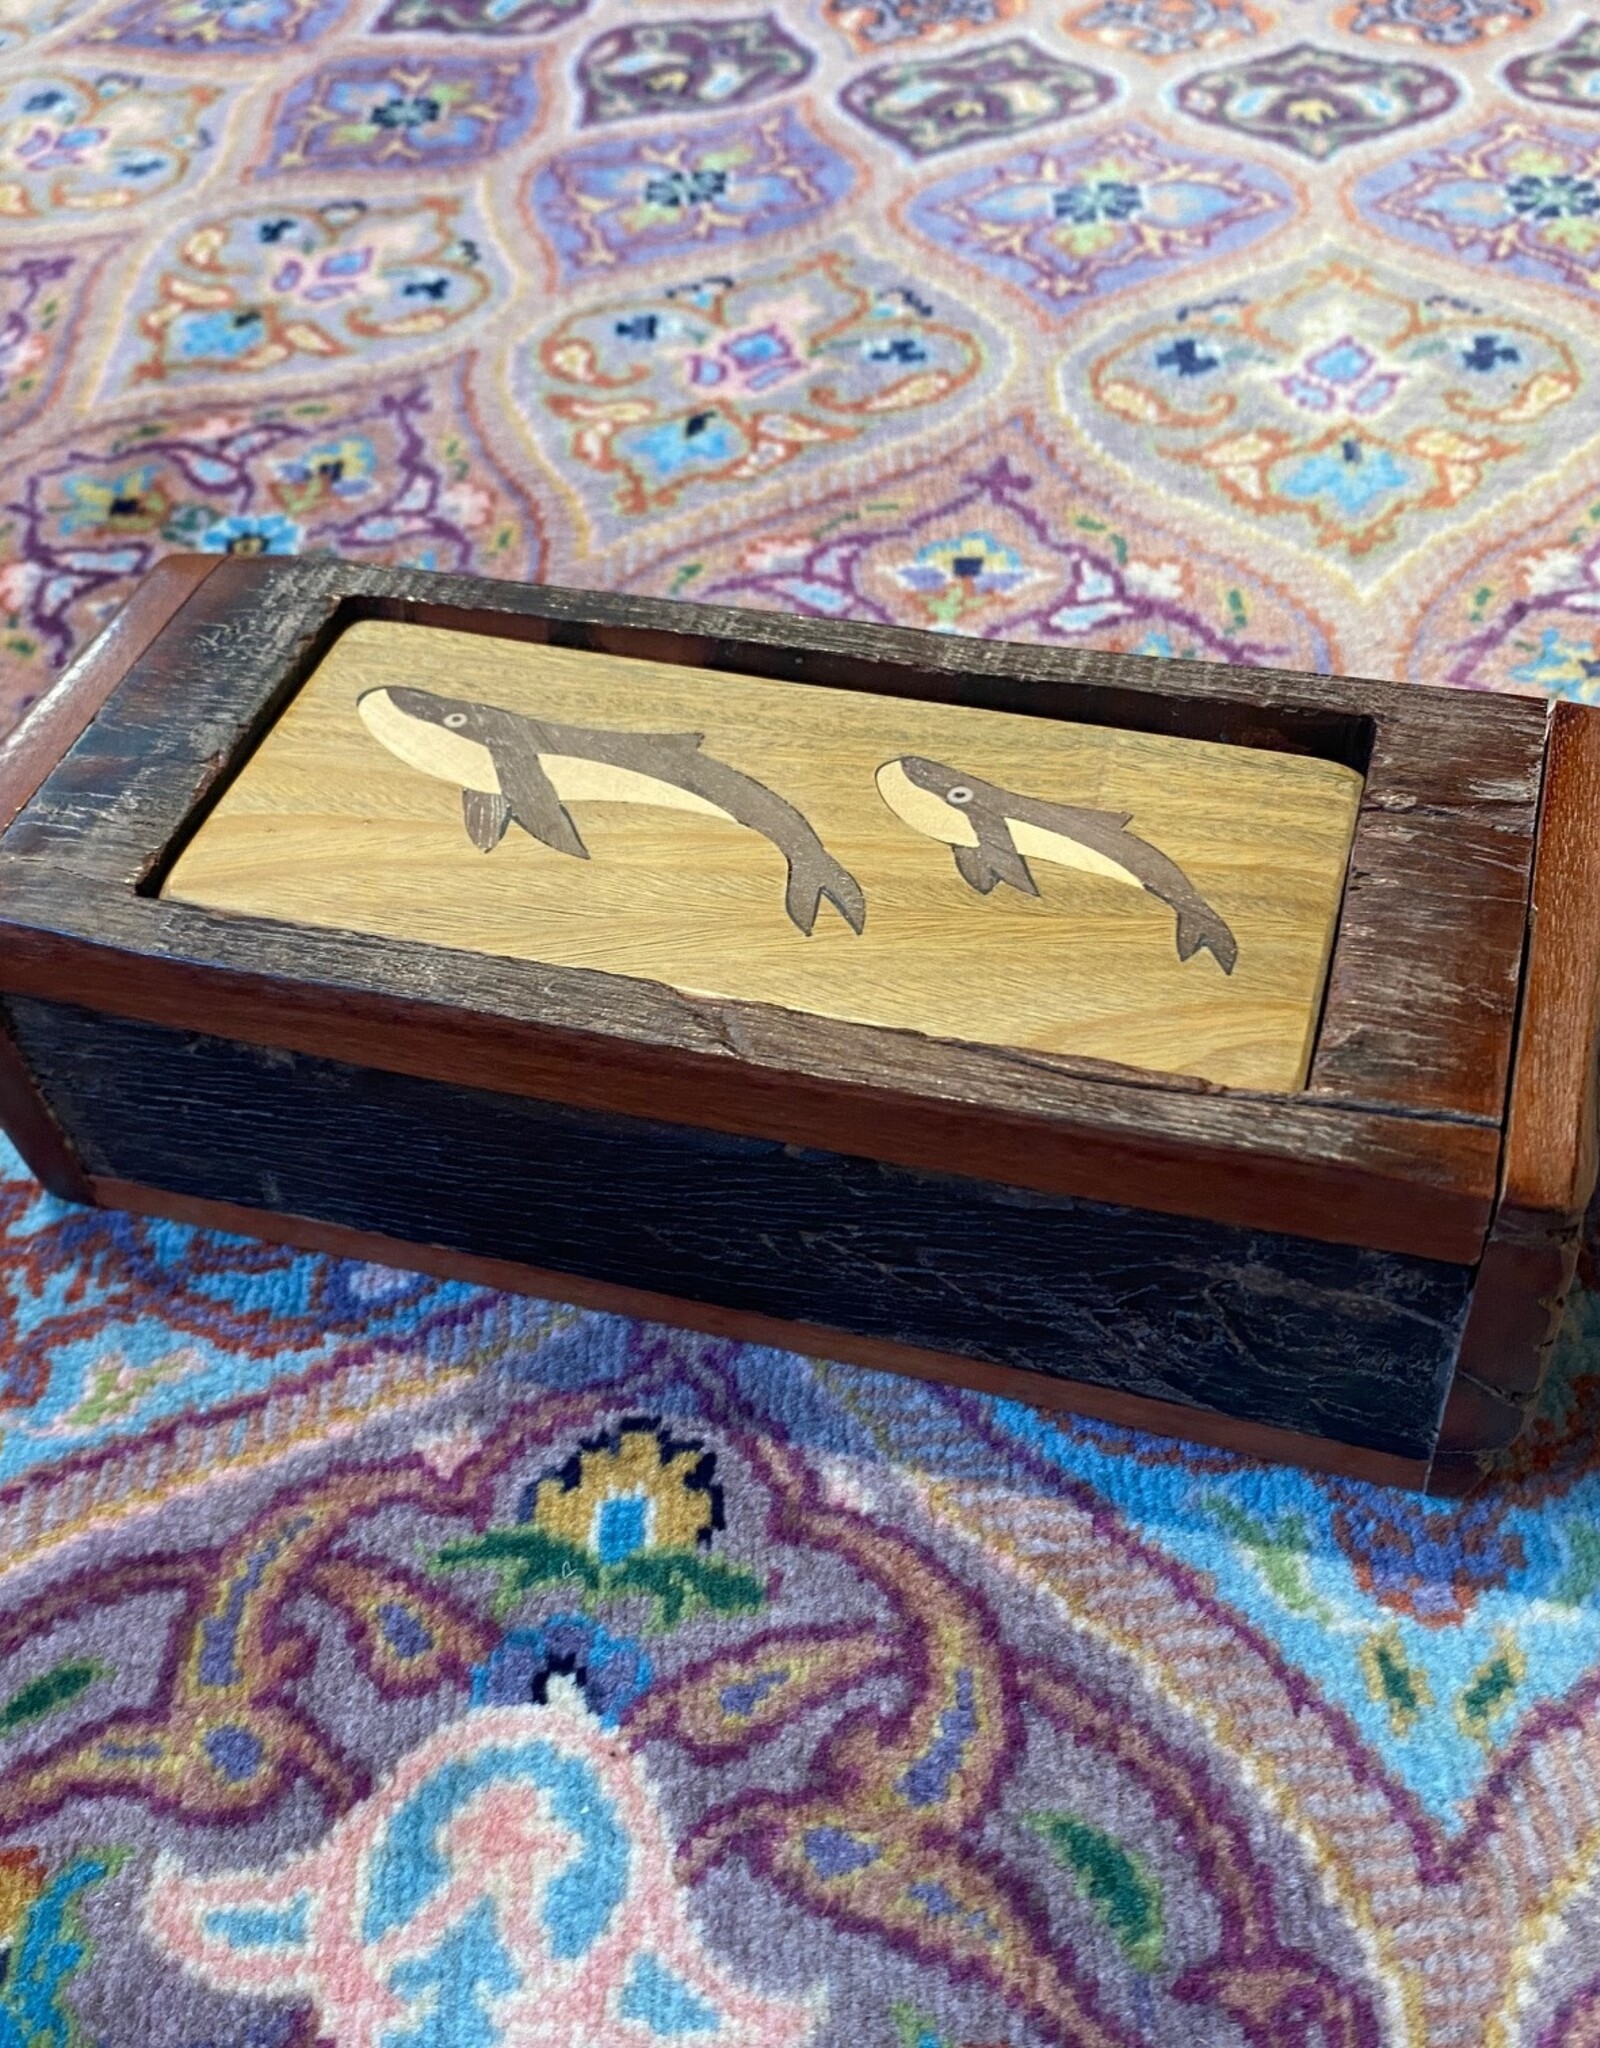 Pampeana Wooden Box